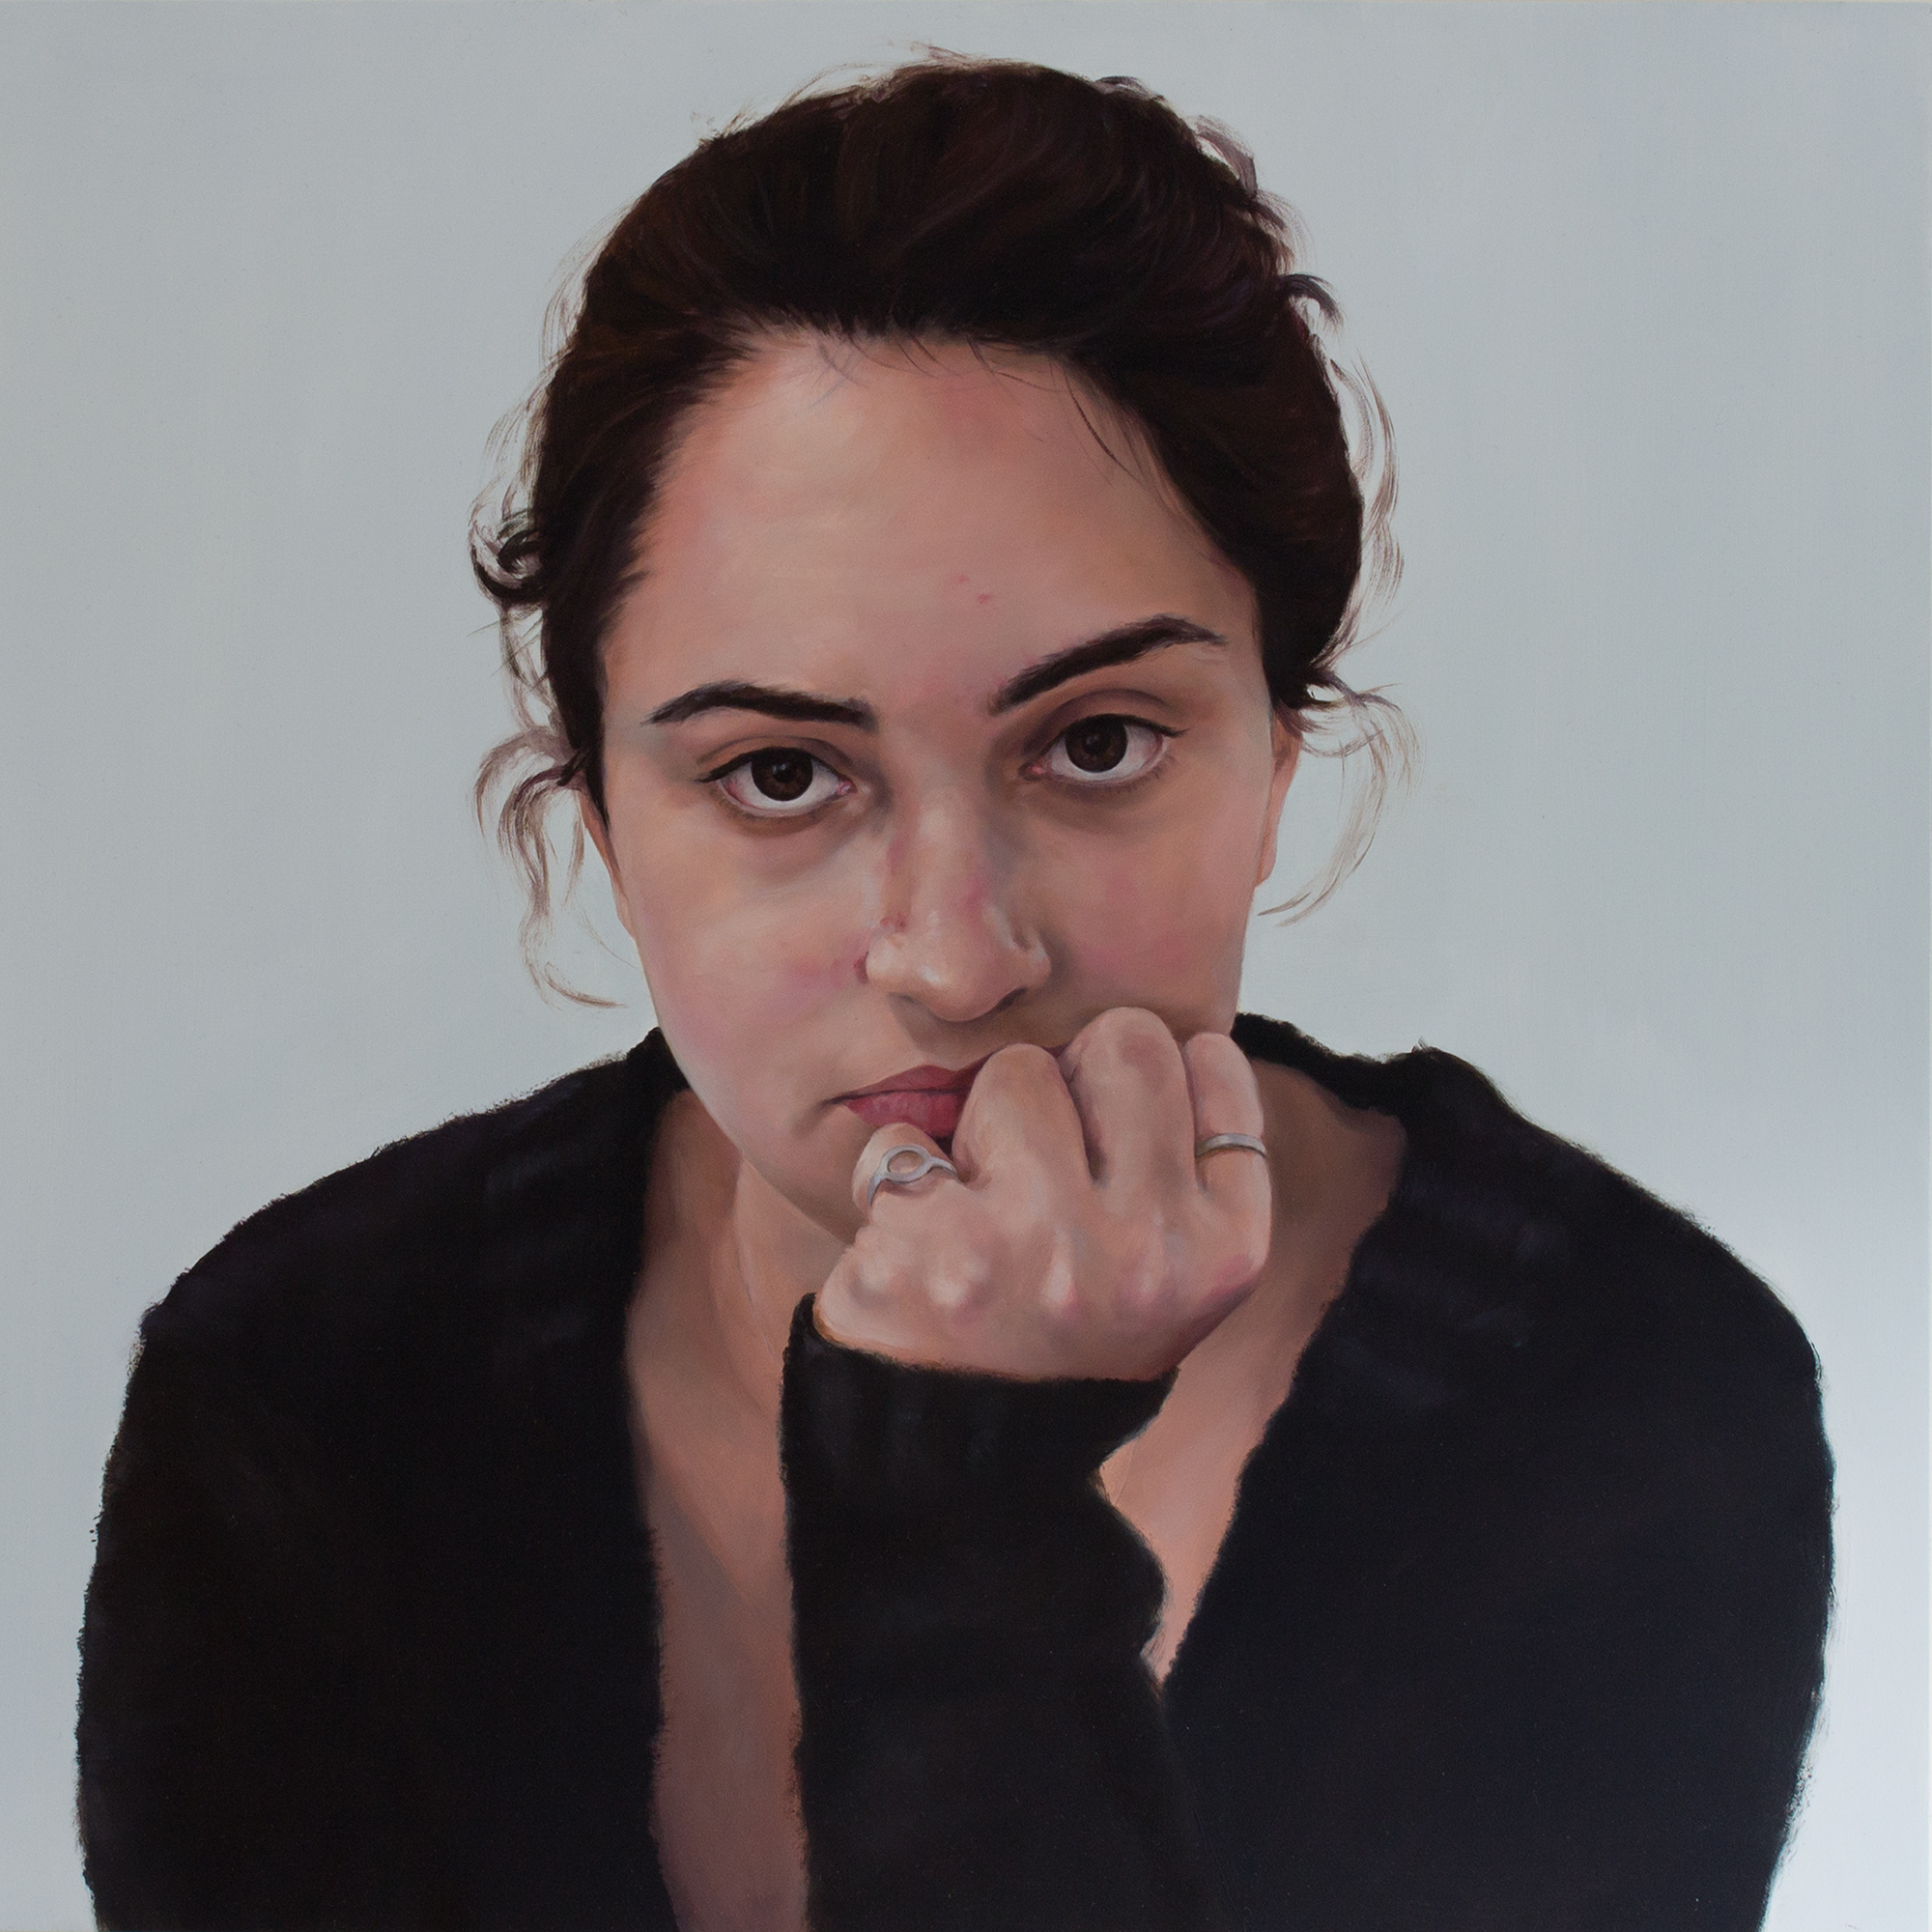   Self-Portrait III / Plain Sight   oil on wood  20" x 20," 2014   